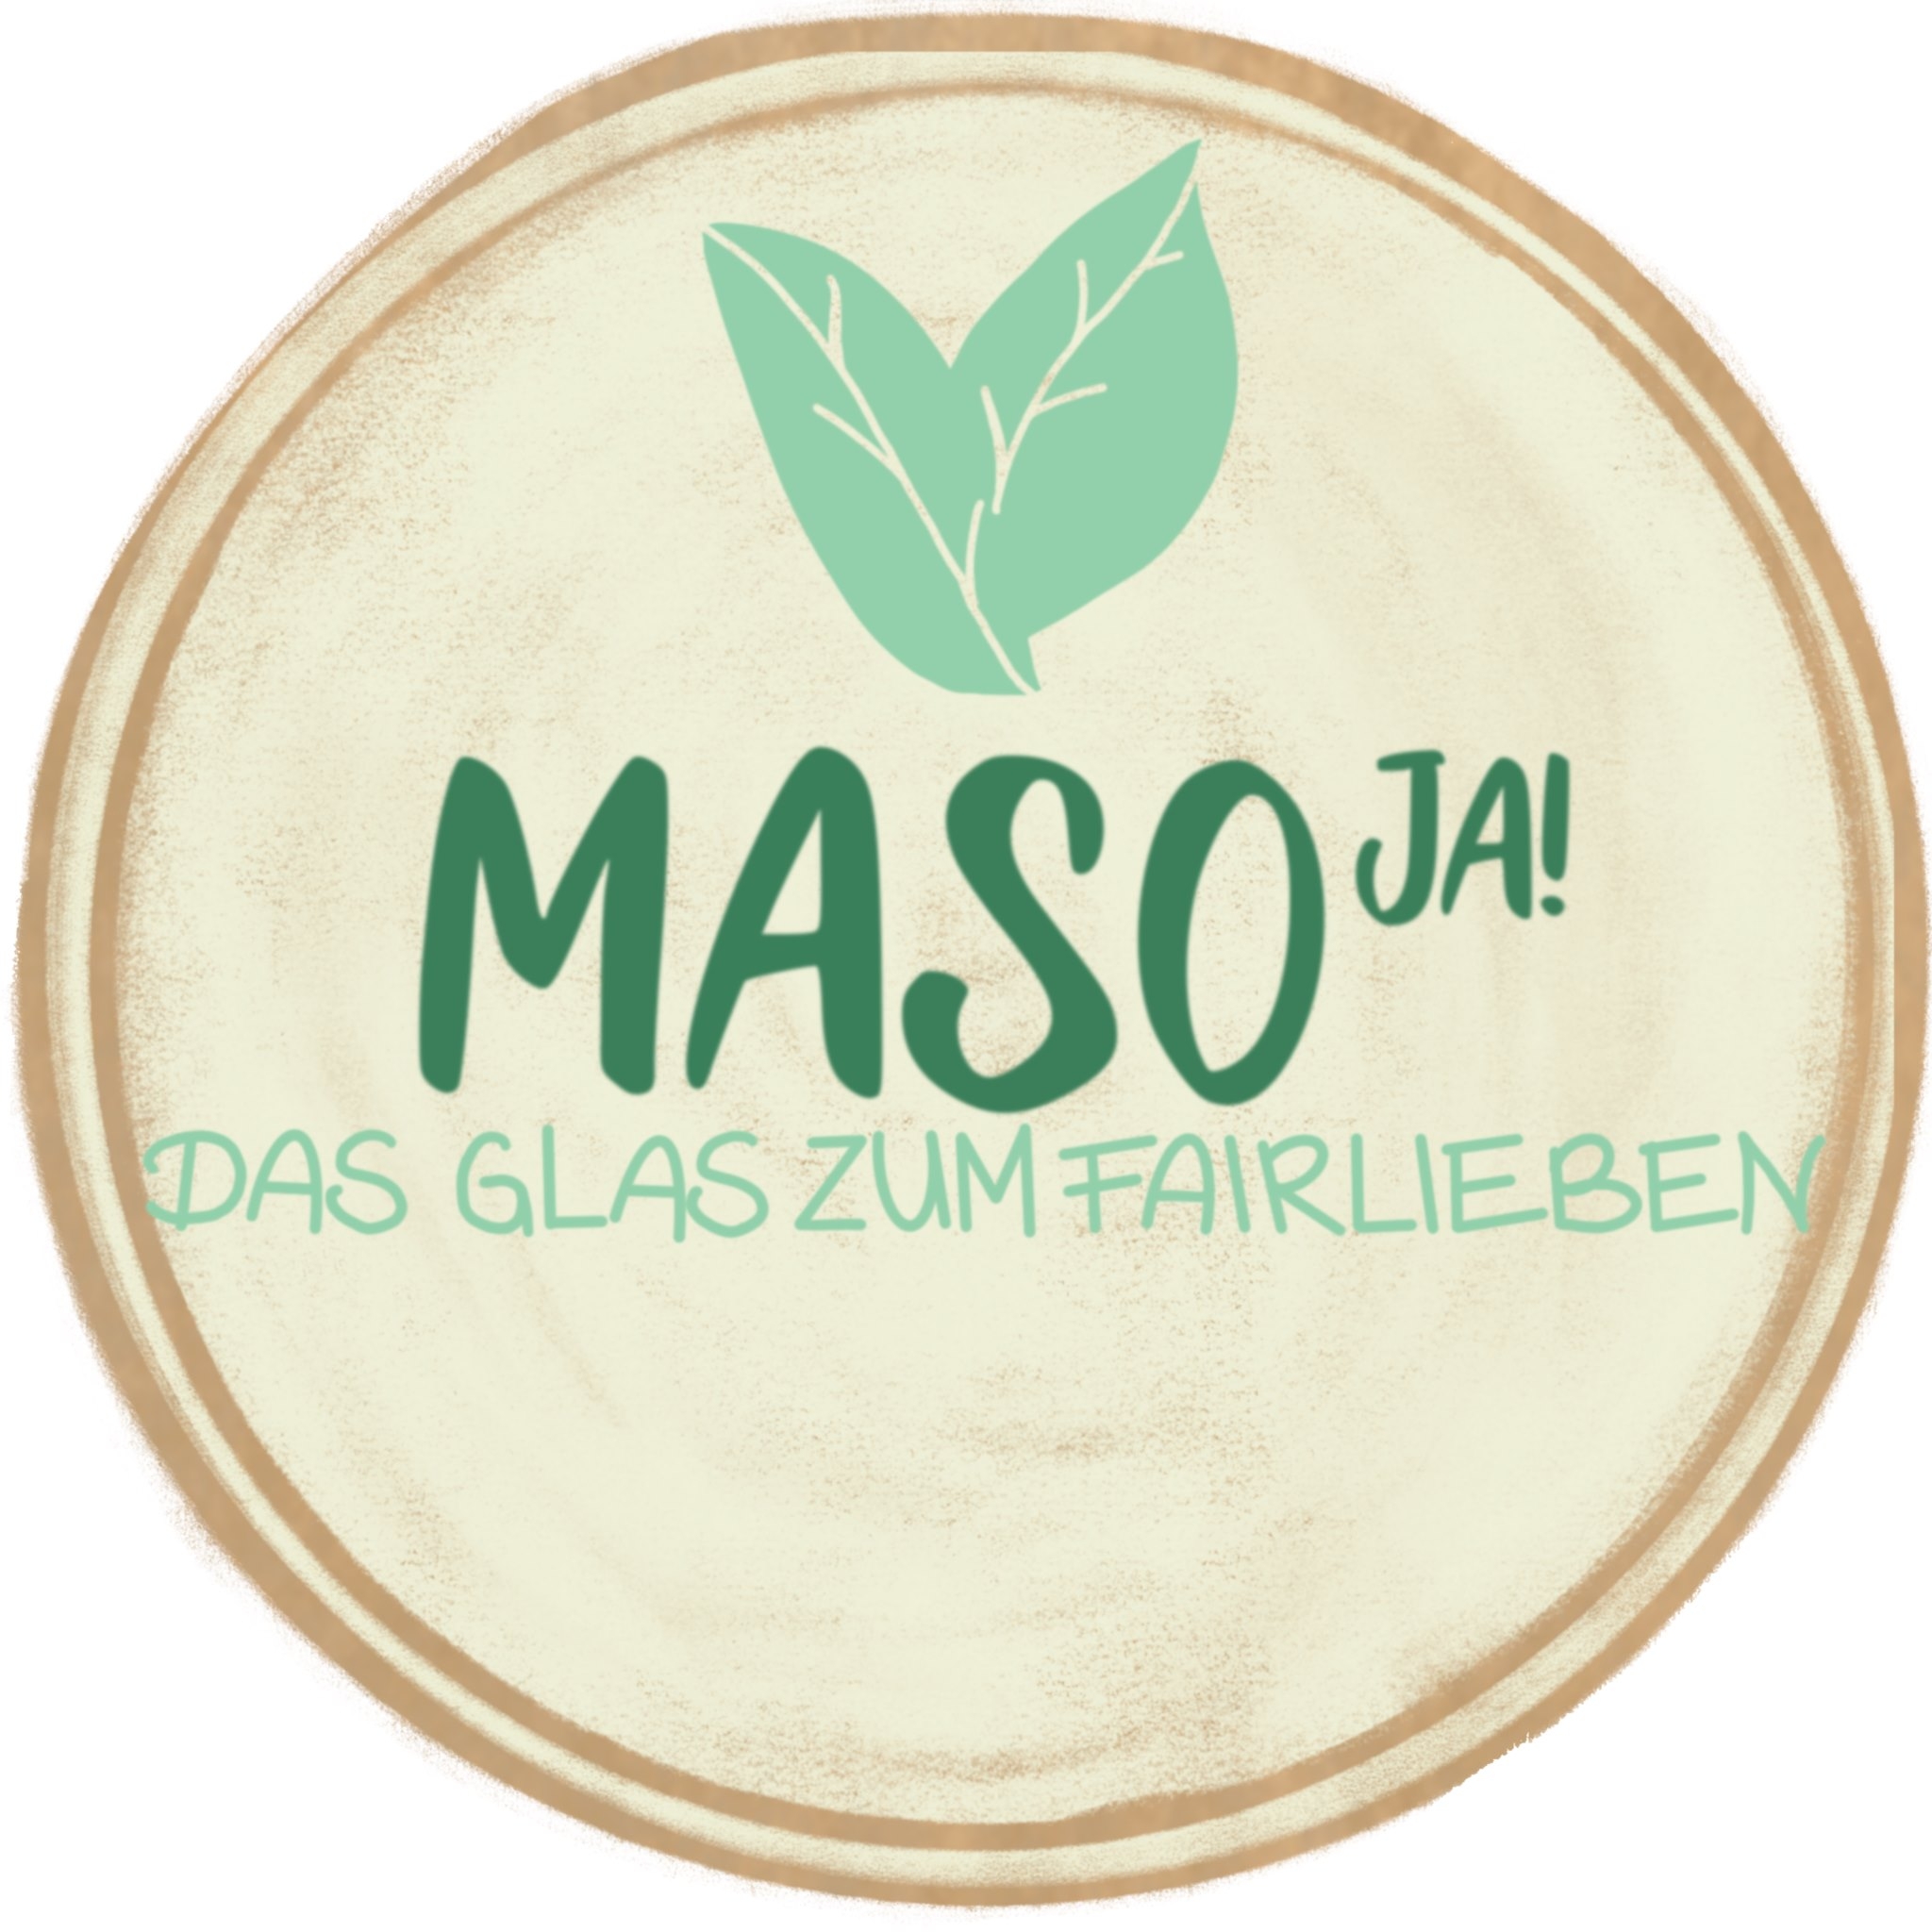 Logo from Masoja in a circle